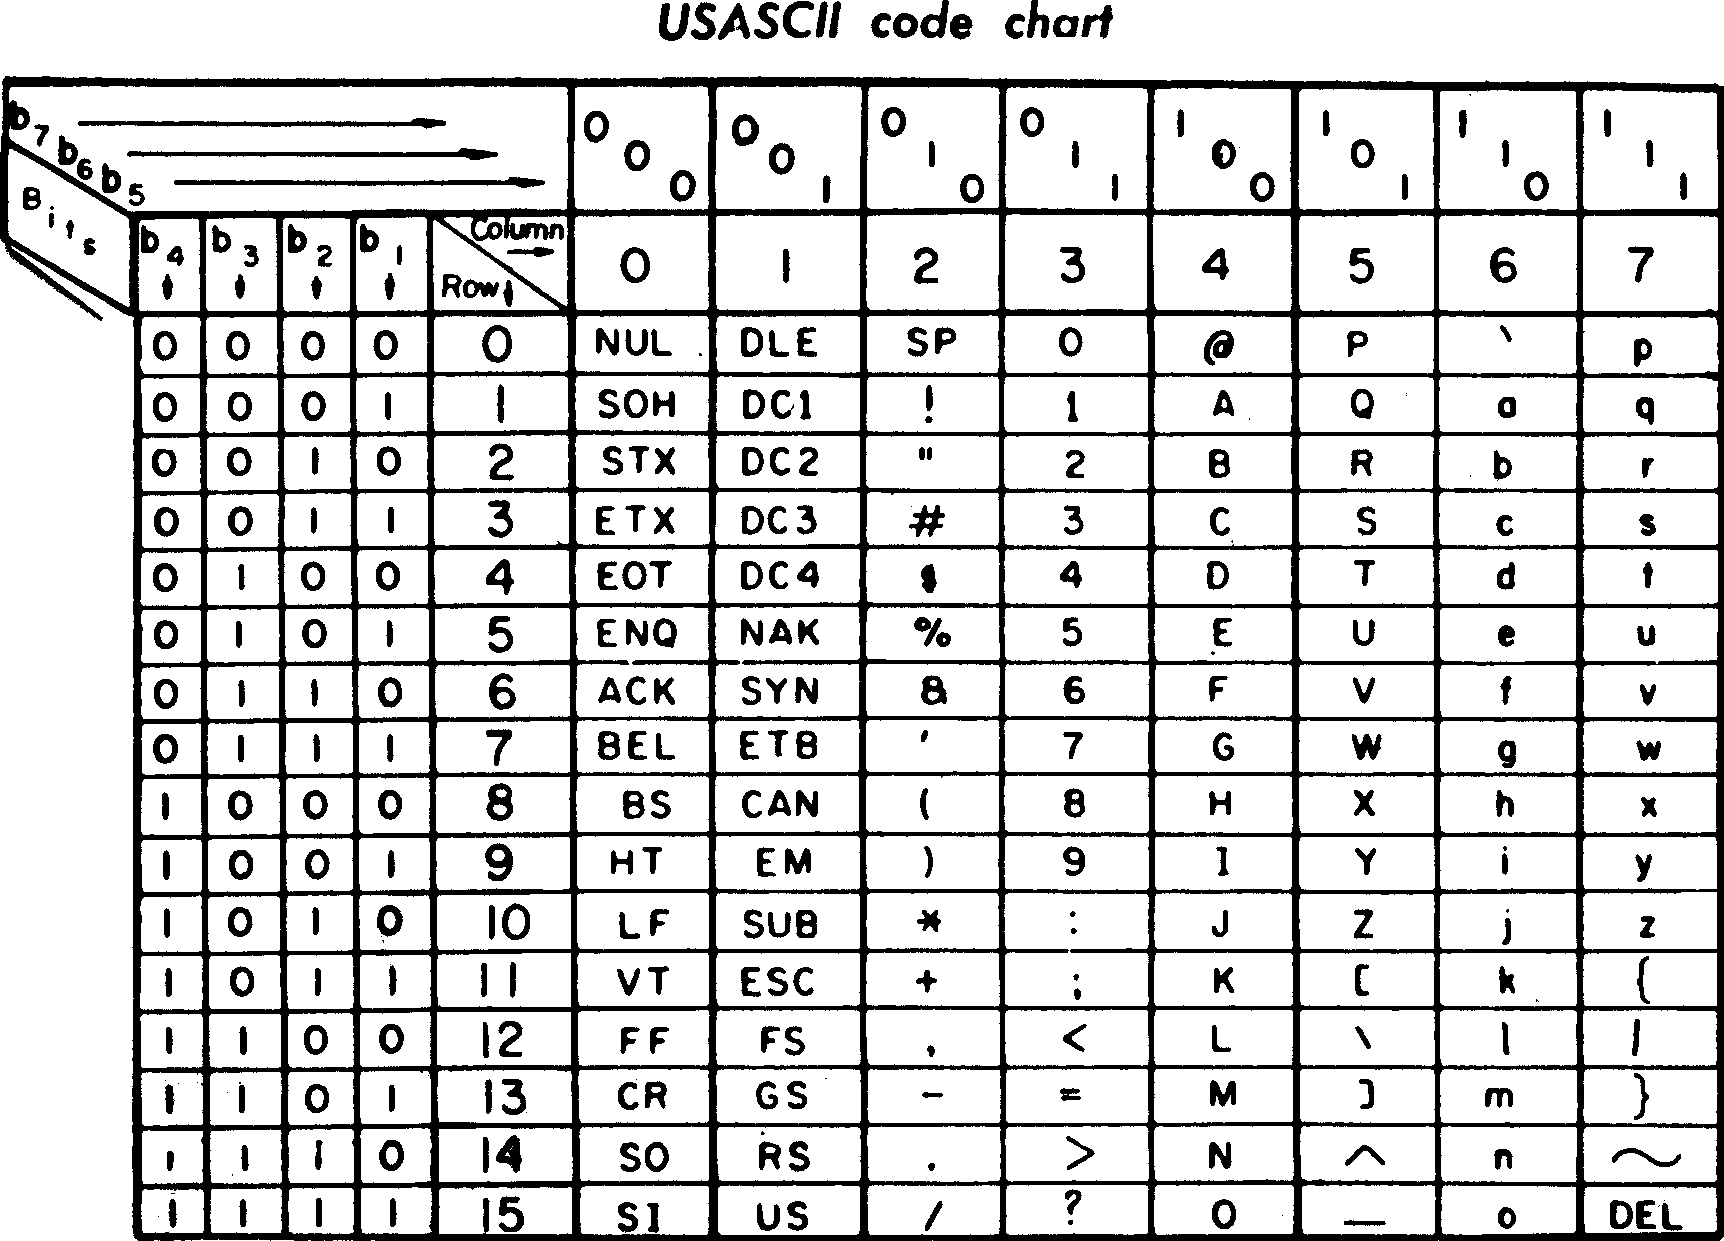 USASCII_code_chart.png